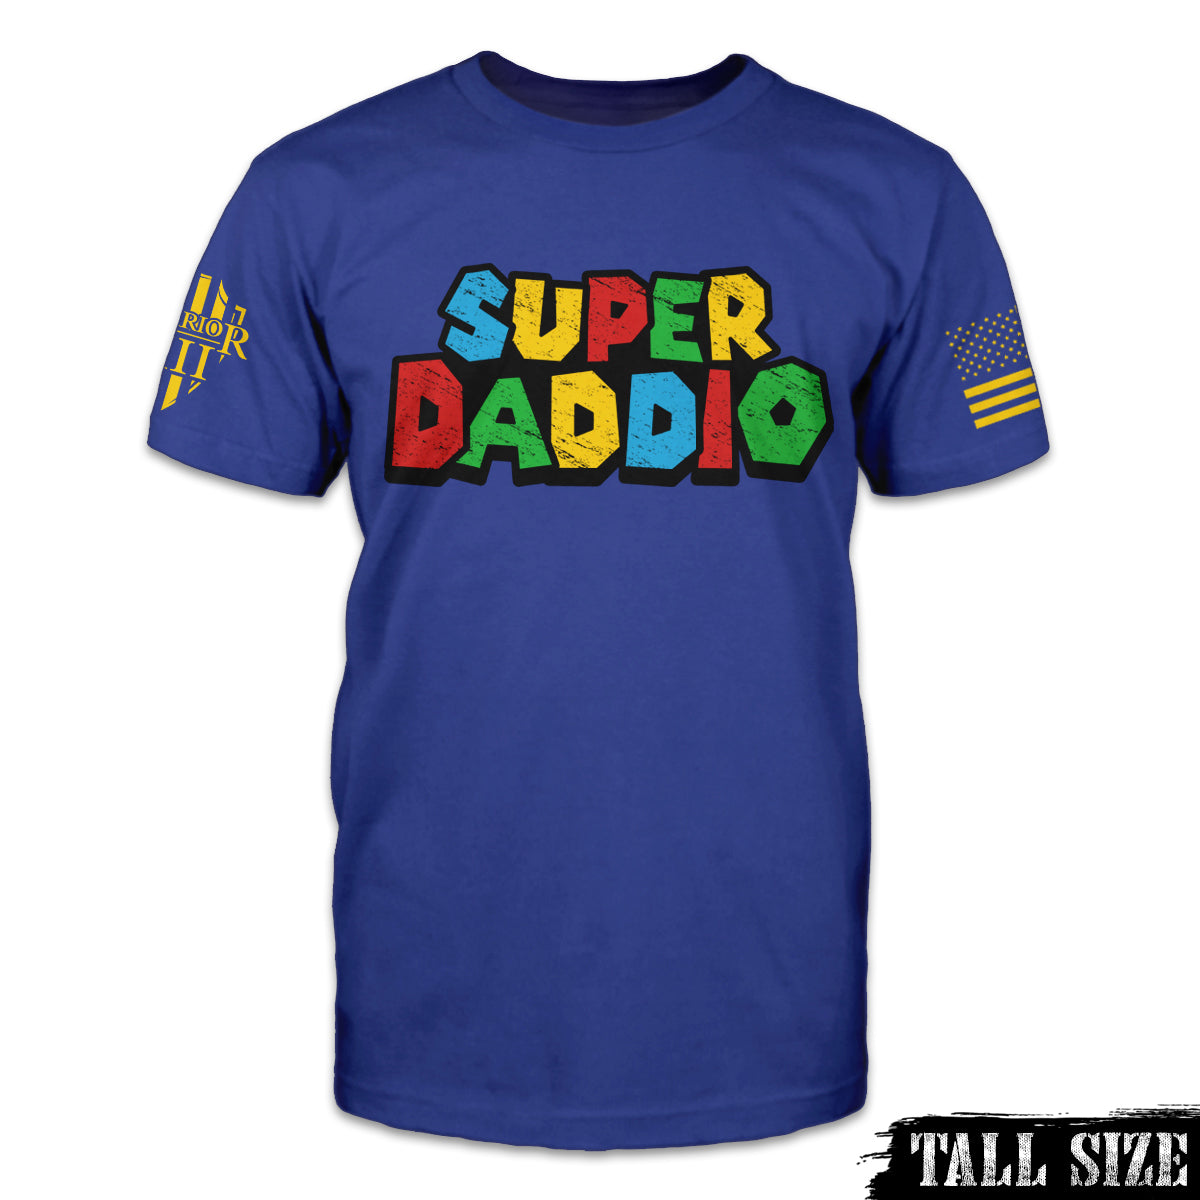 Super Daddio - Tall Size